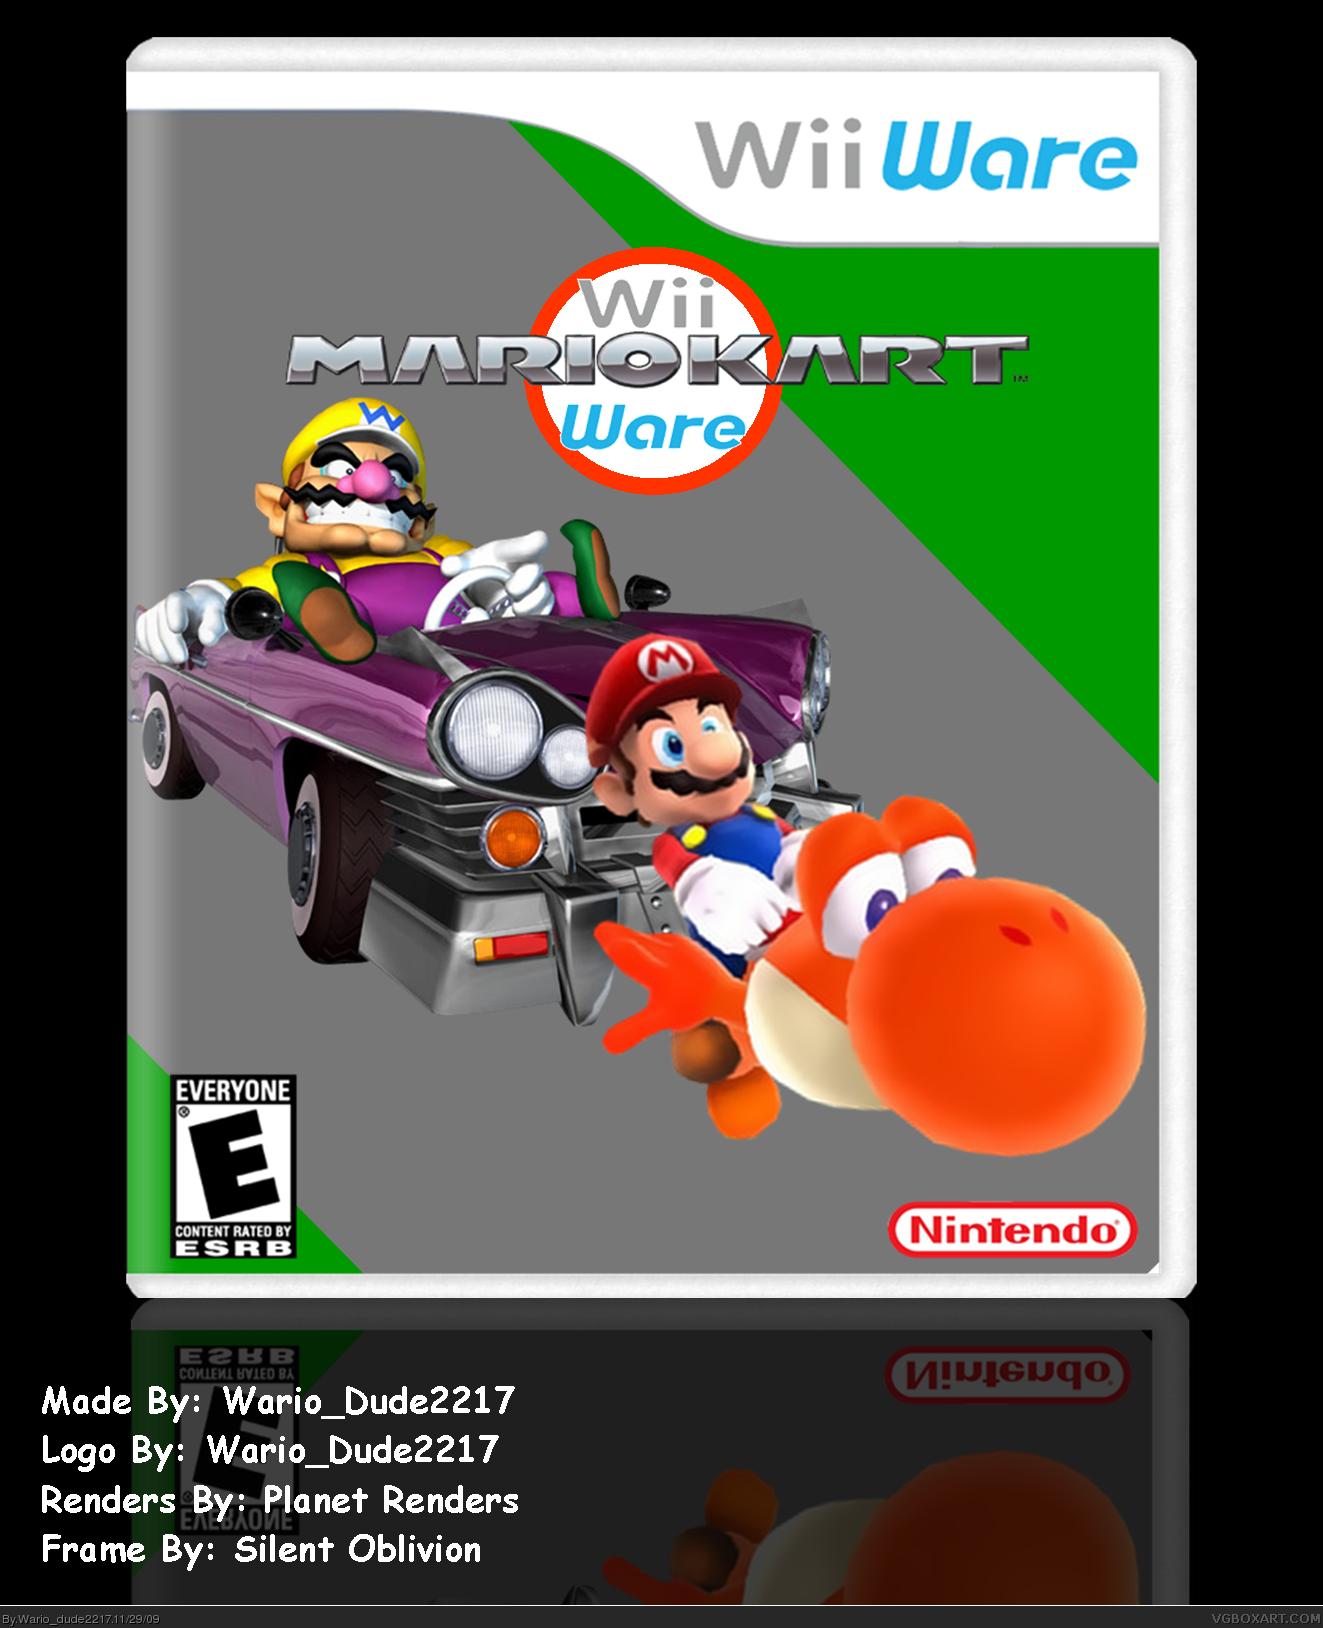 Mario Kart WiiWare box cover